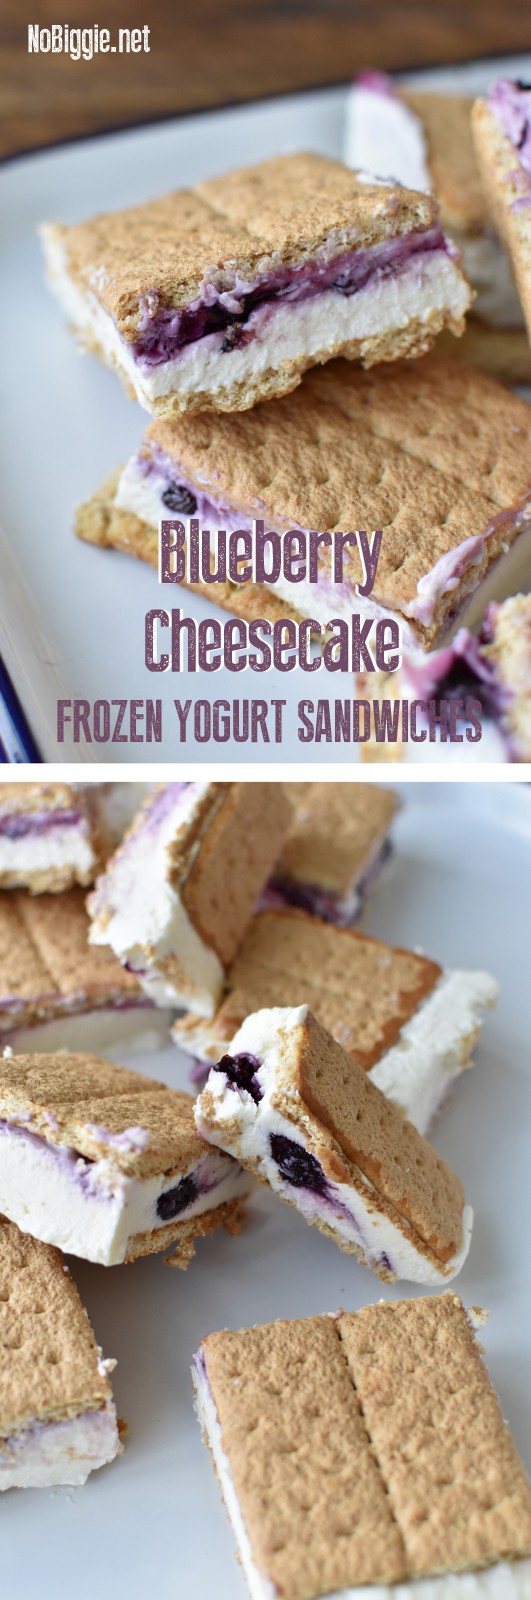 Blueberry Cheesecake Frozen Yogurt Ice cream Sandwiches | NoBiggie.net